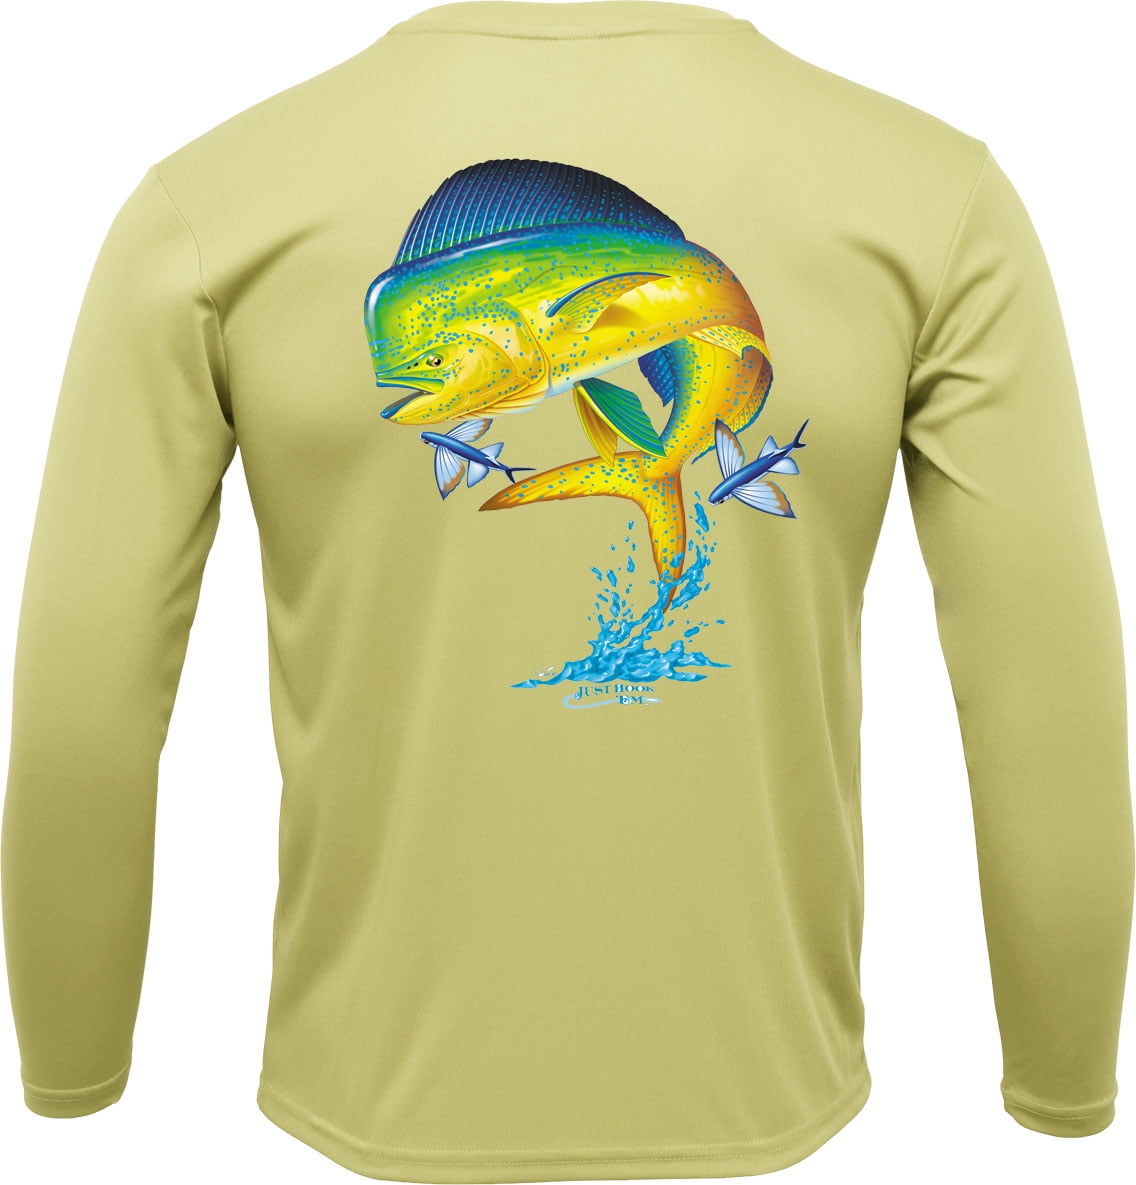 Just Hook 'Em™ Men's Long Sleeve Yellow Dolphin Performance Shirt, S- XXL 